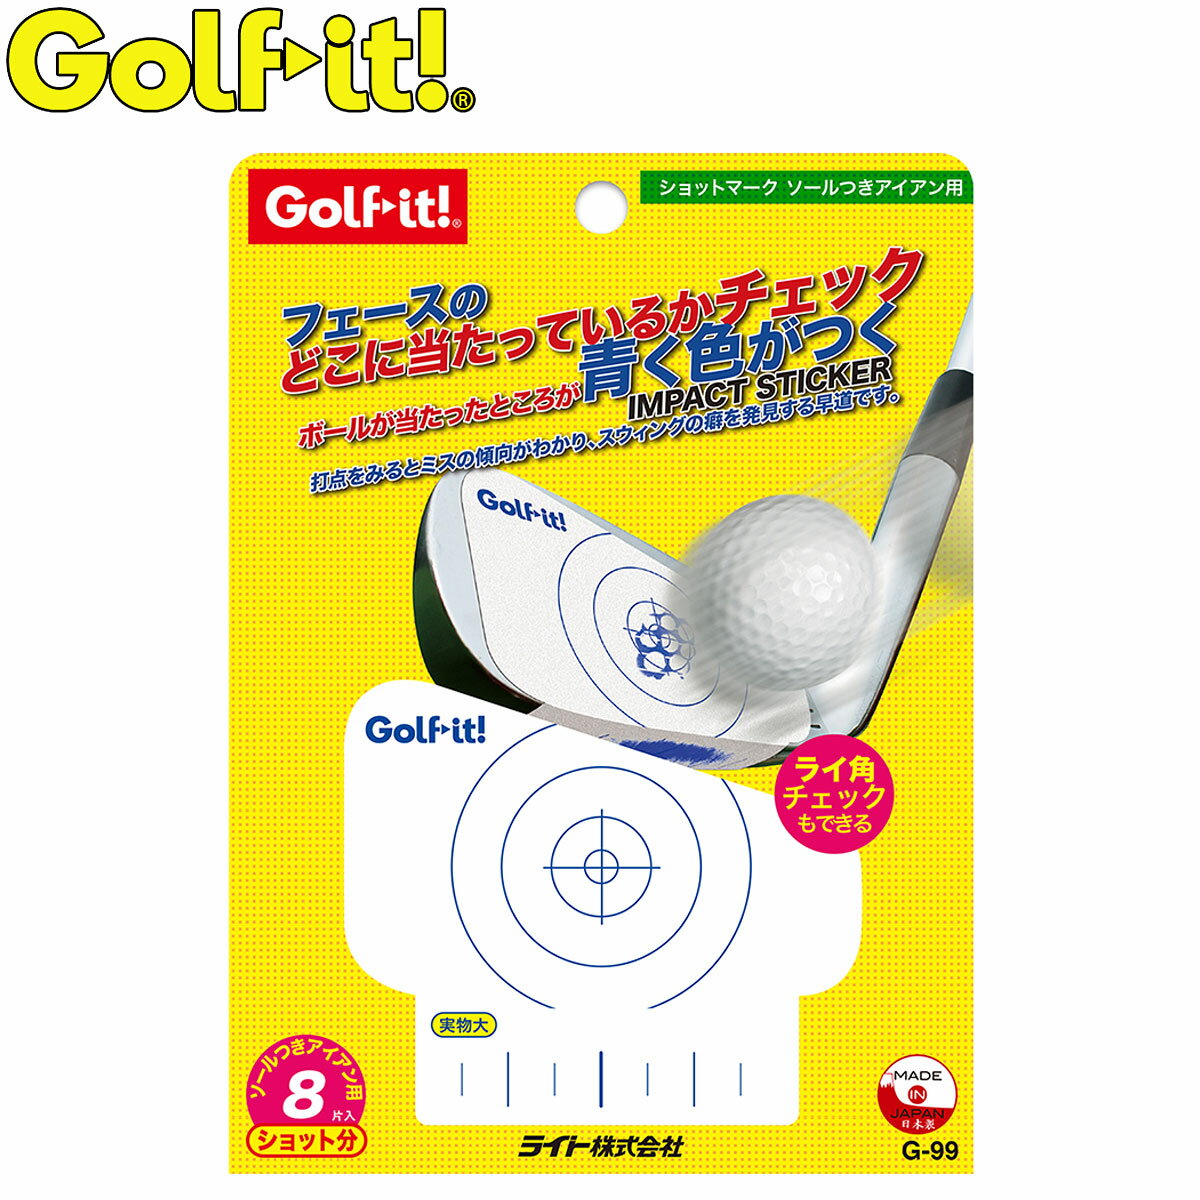 Golfit ゴルフイット ライト正規品 ショットマーク ソール付き アイアン用 「G-99」 「ゴルフスイング練習用品」